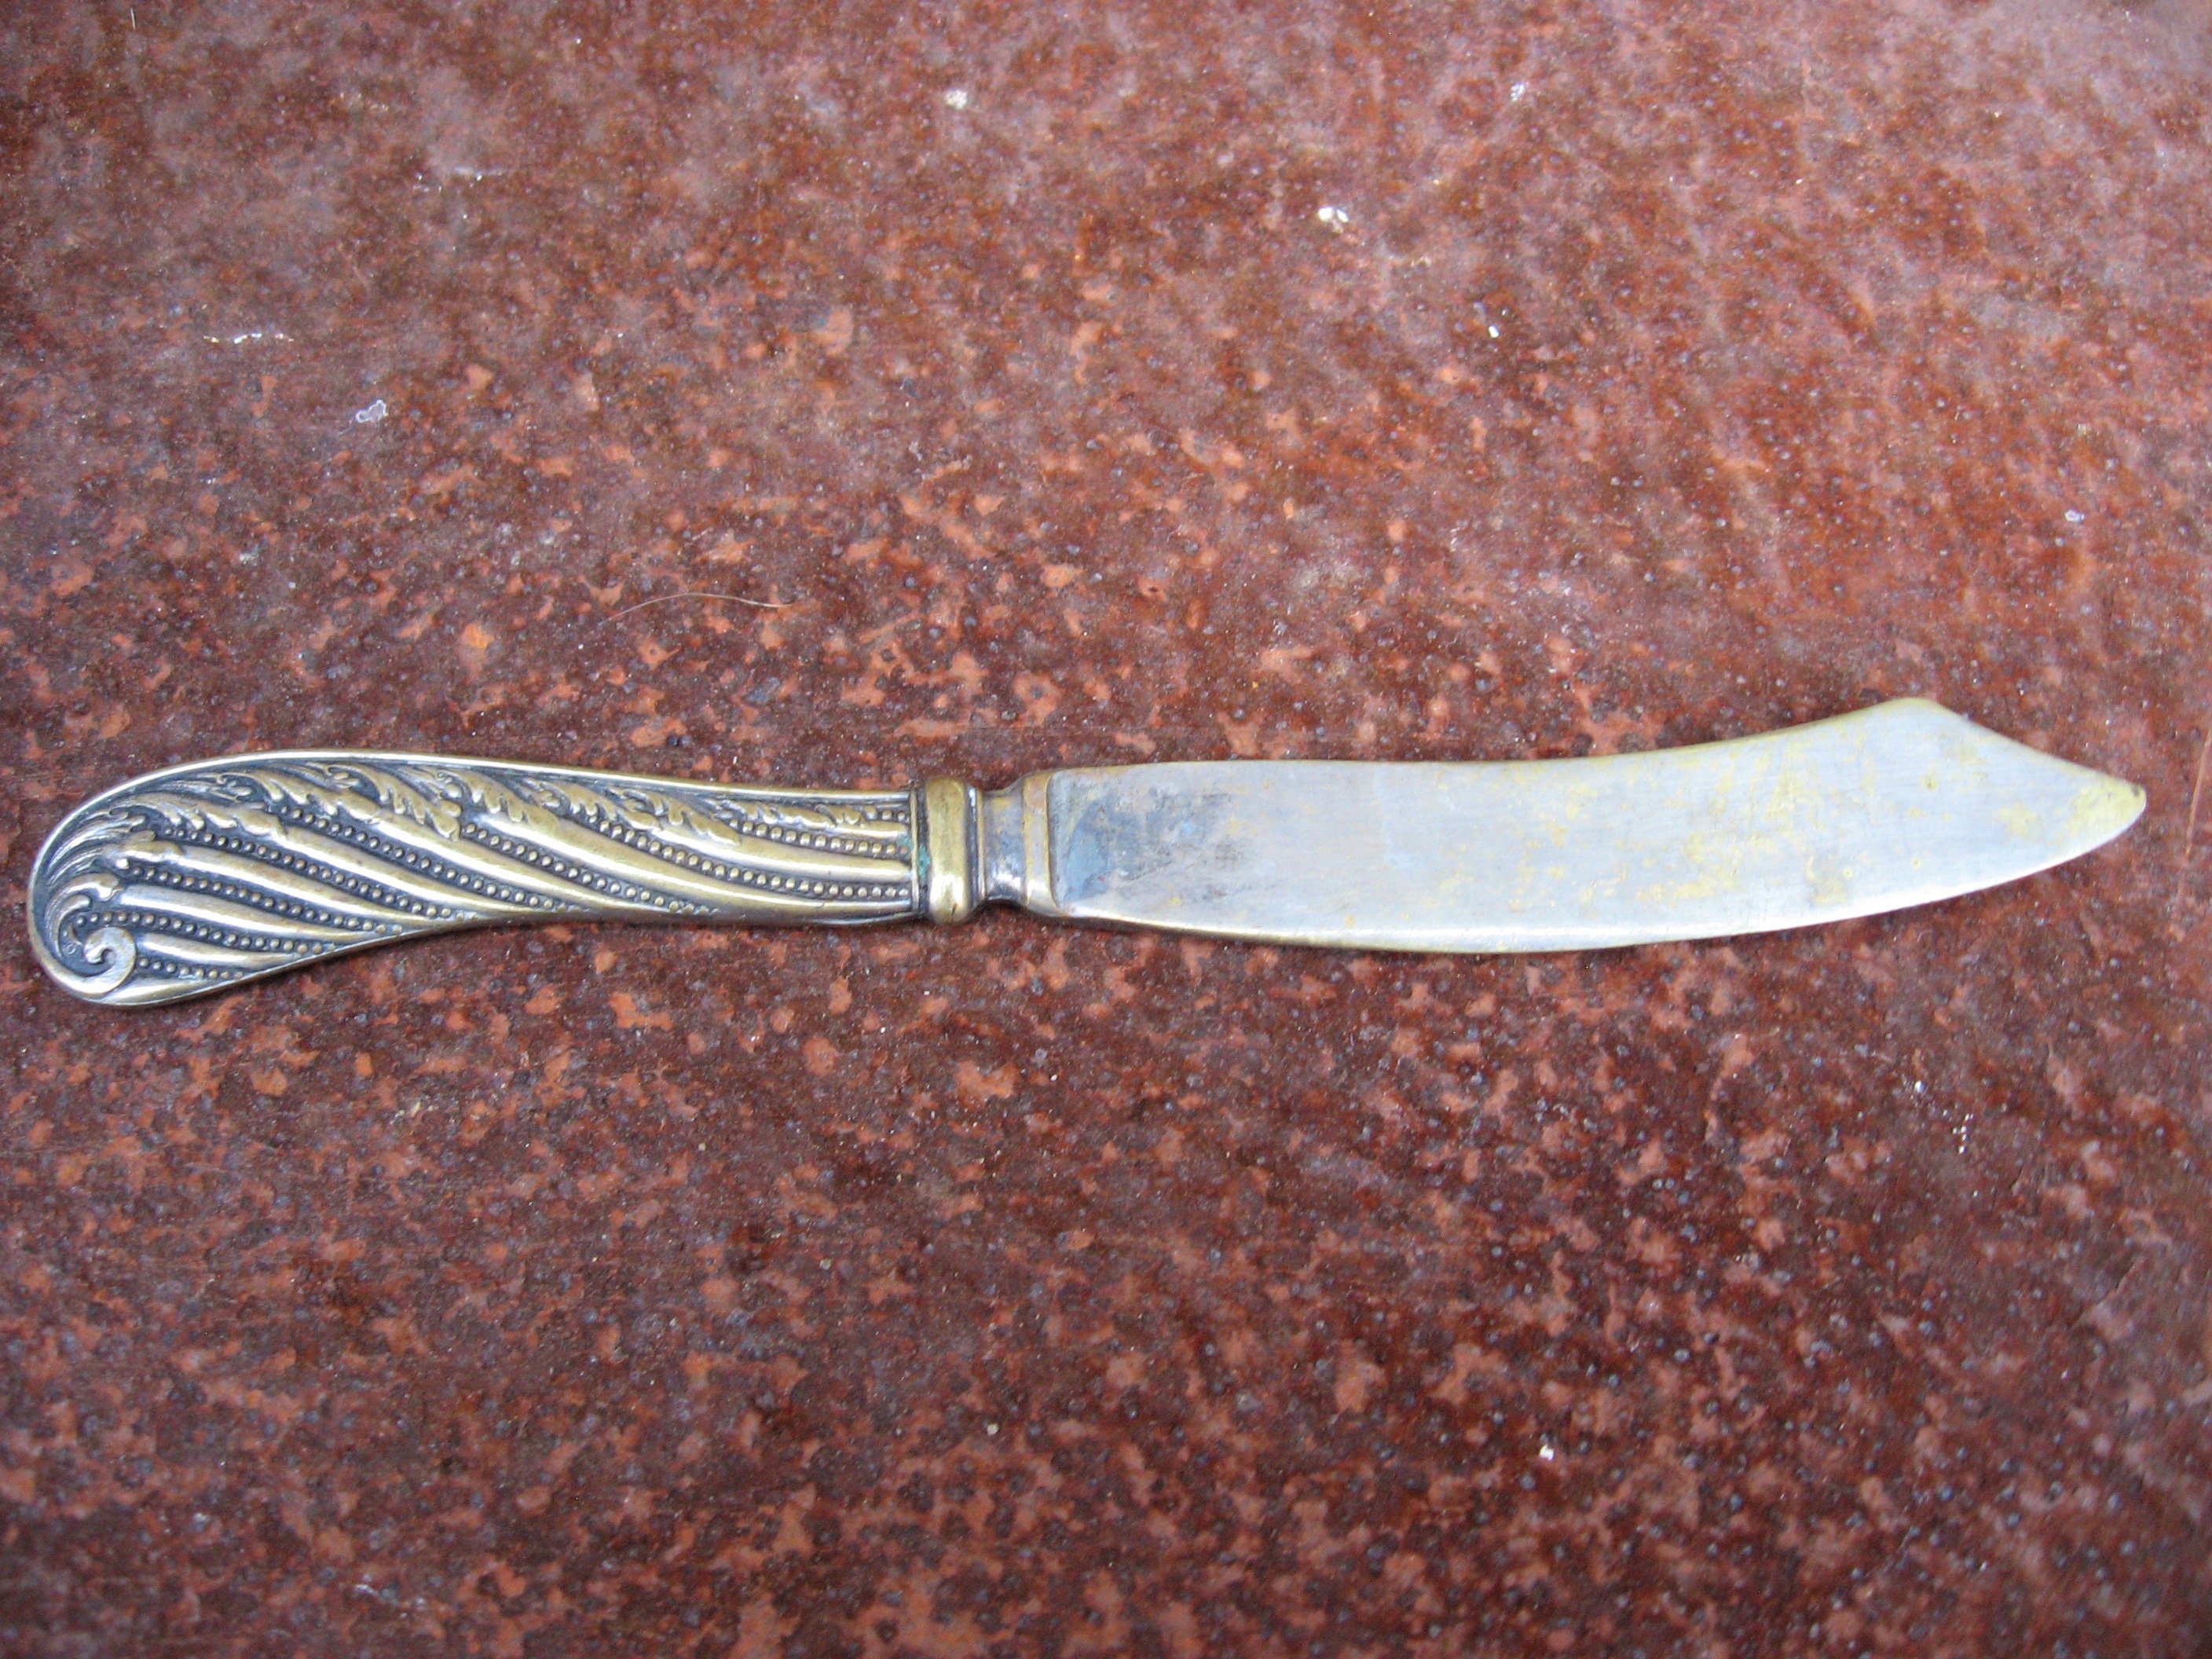  Envelope knife/paper knife/letter opener/Hindu dagger/knife in  a shape of sword